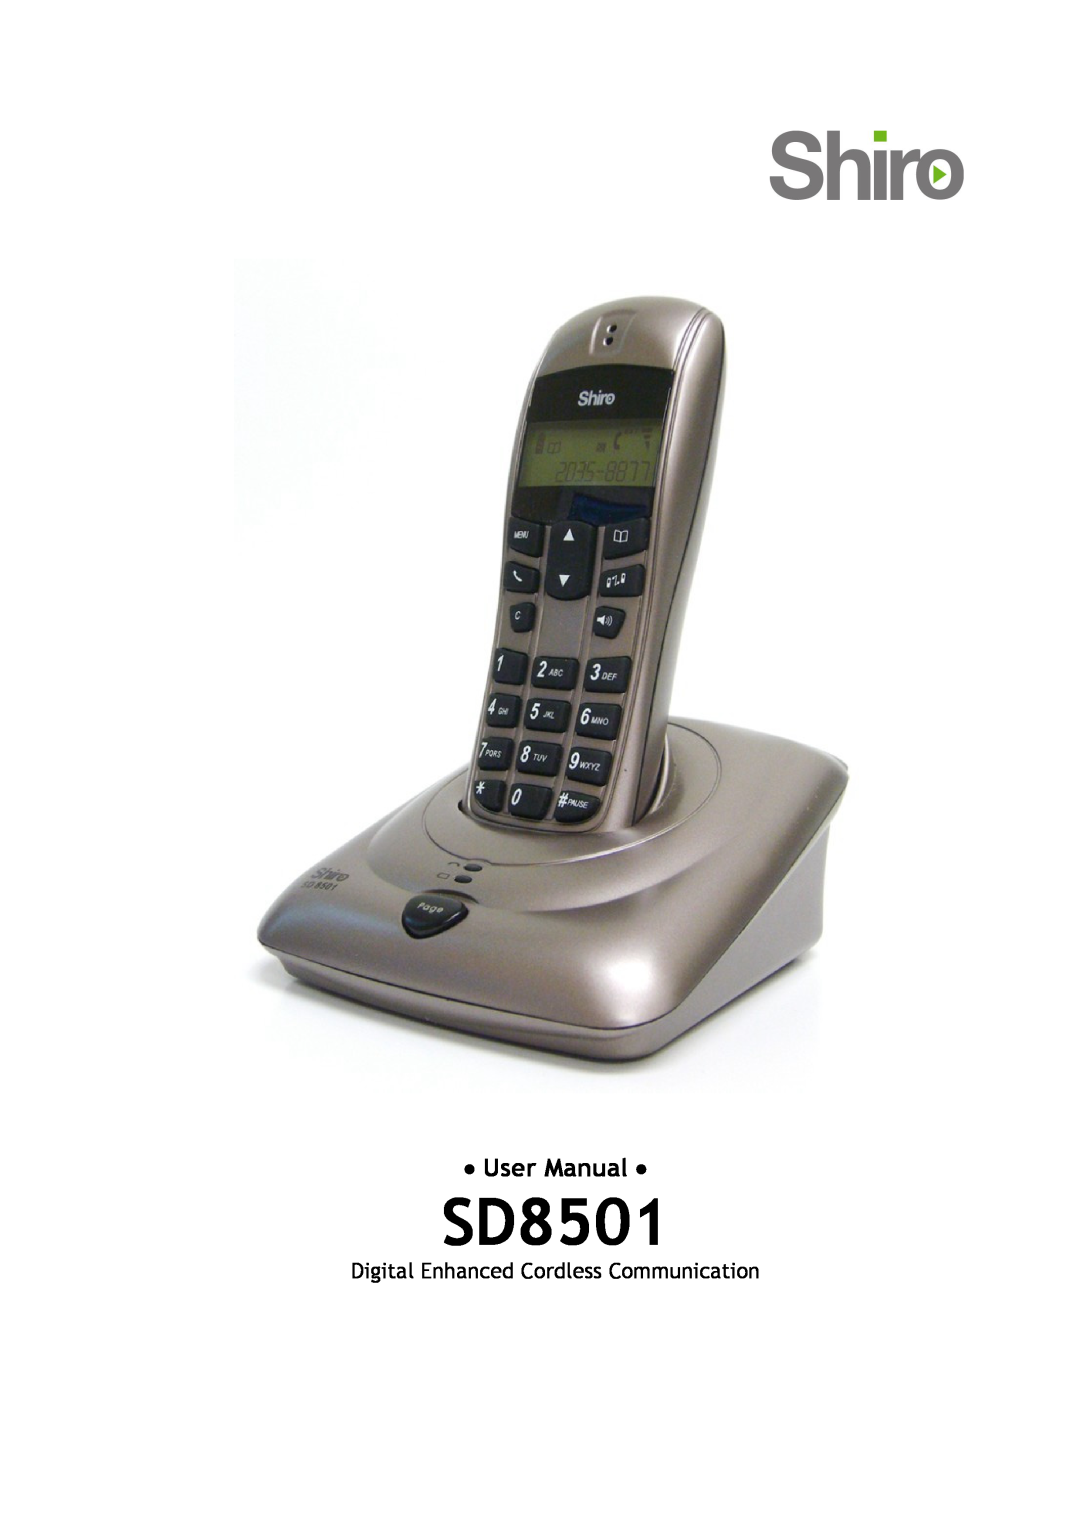 Shiro SD8501 user manual User Manual, Digital Enhanced Cordless Communication 